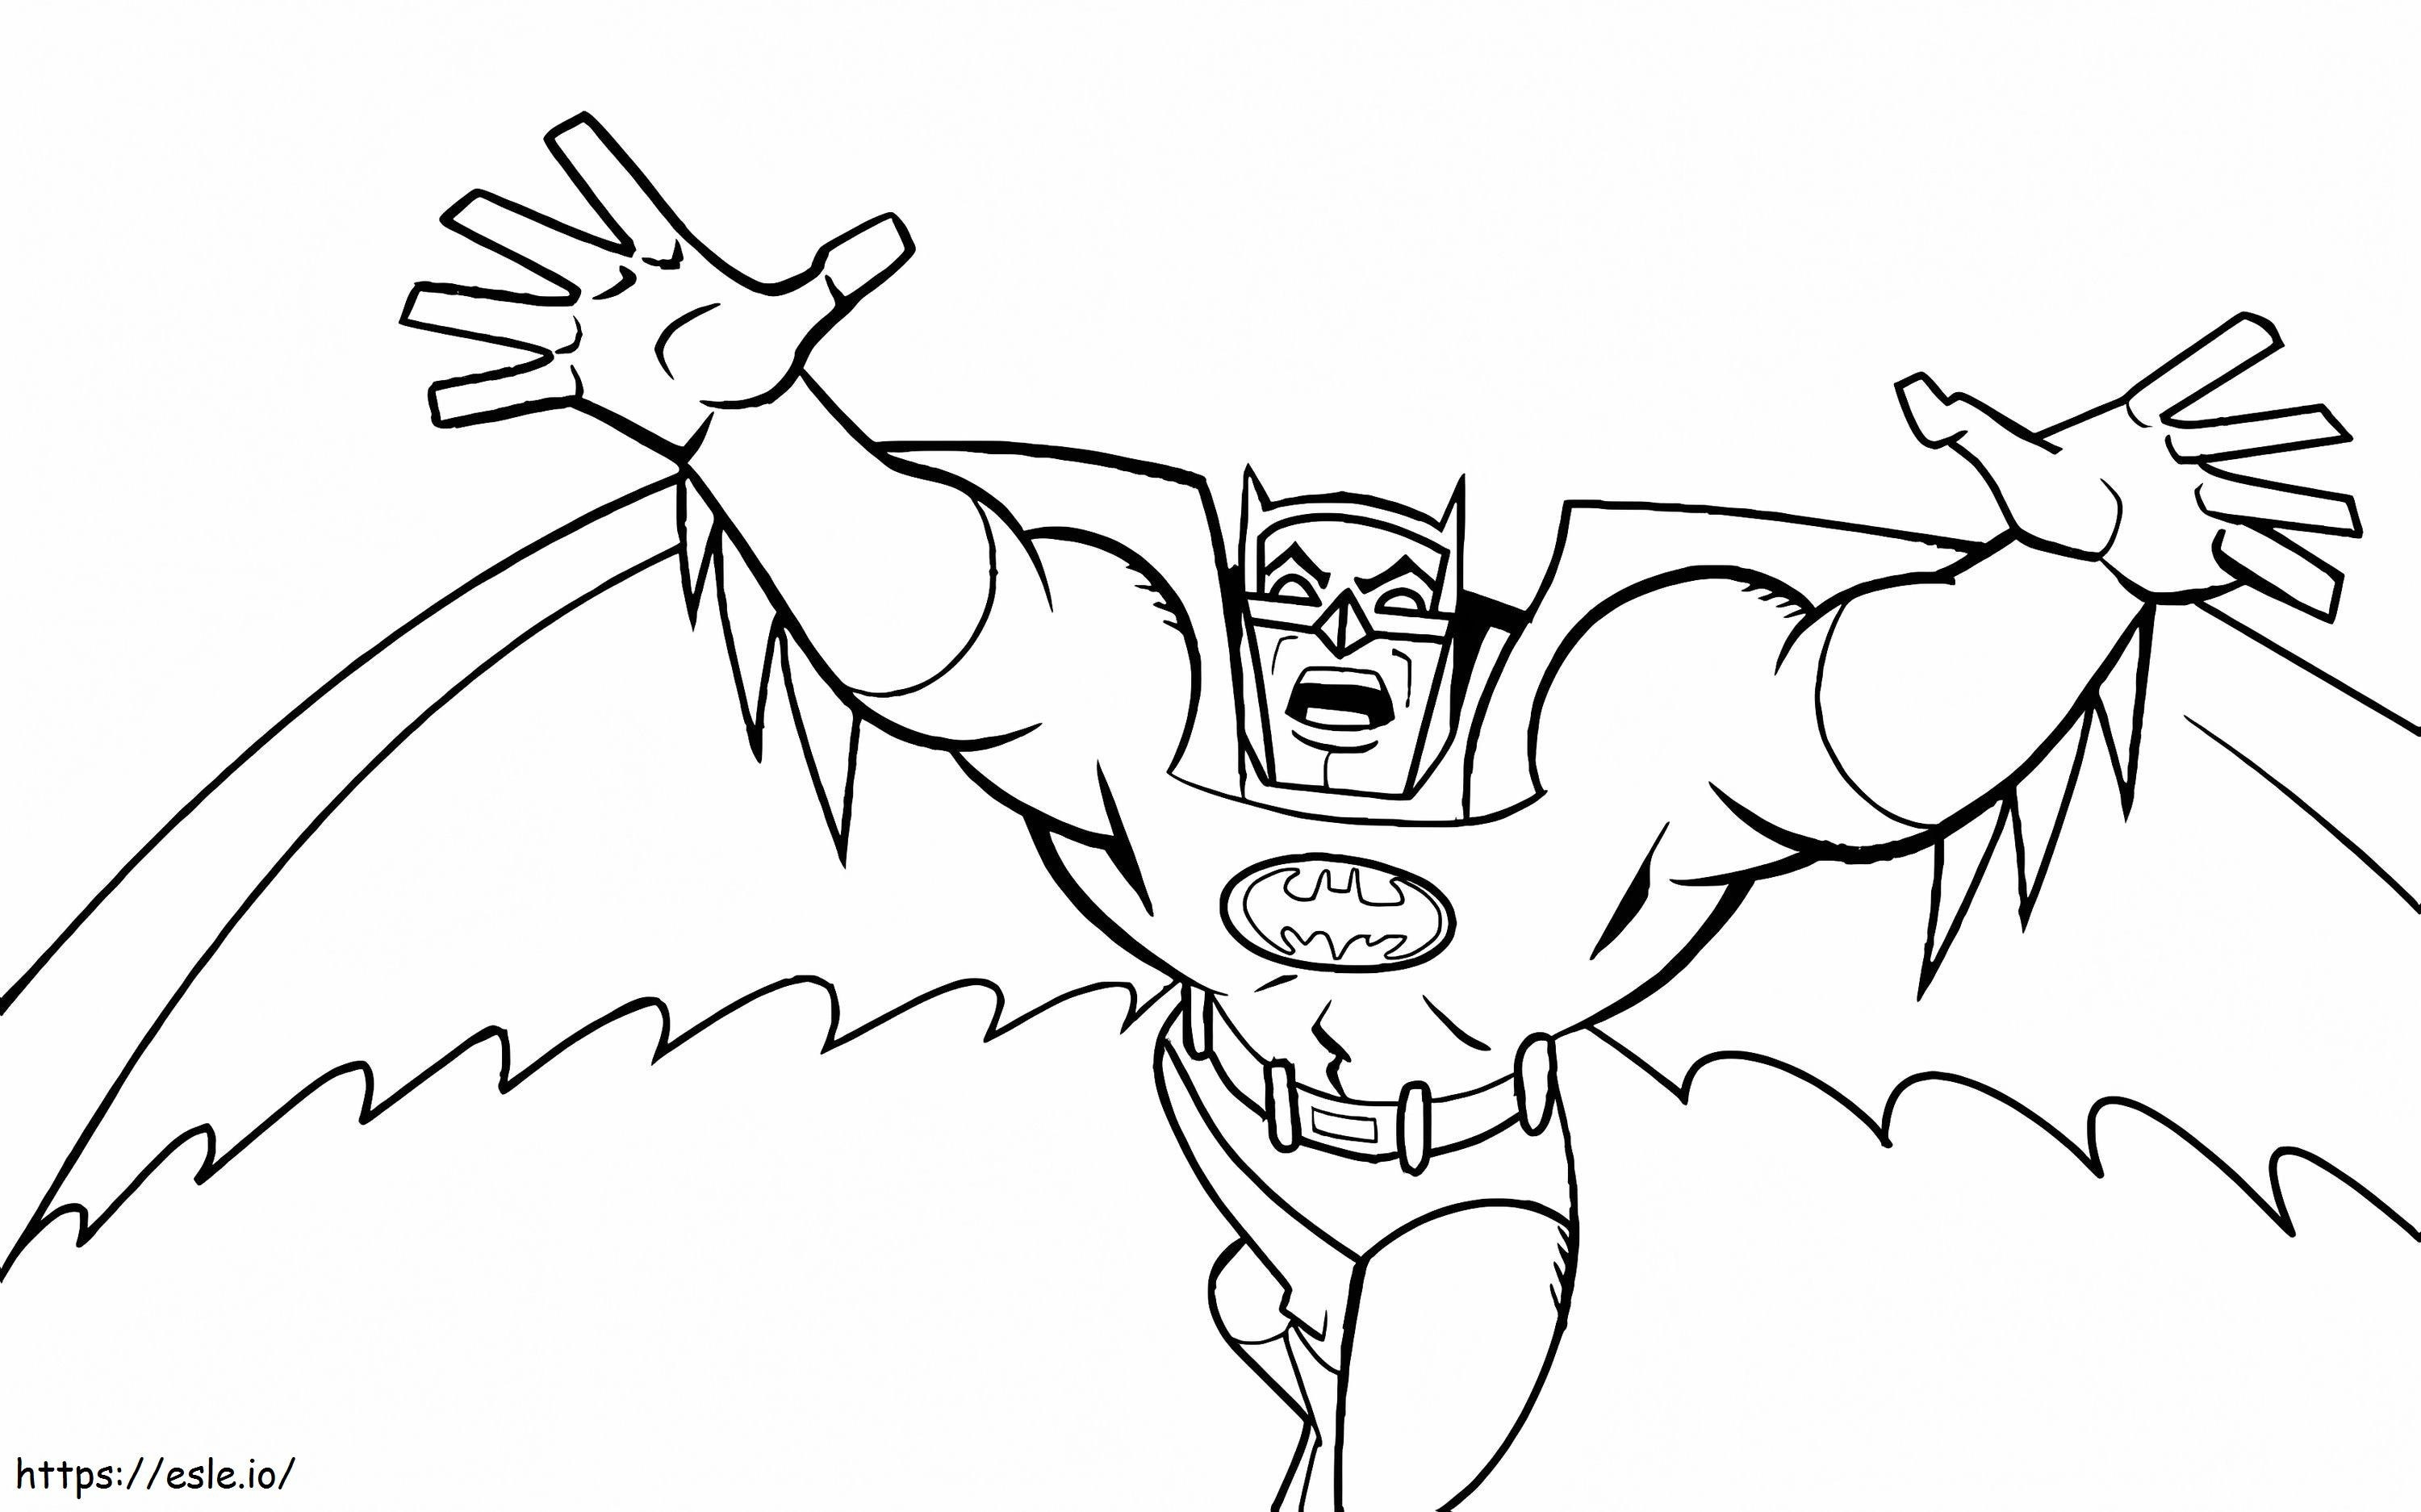 Batman 2 coloring page